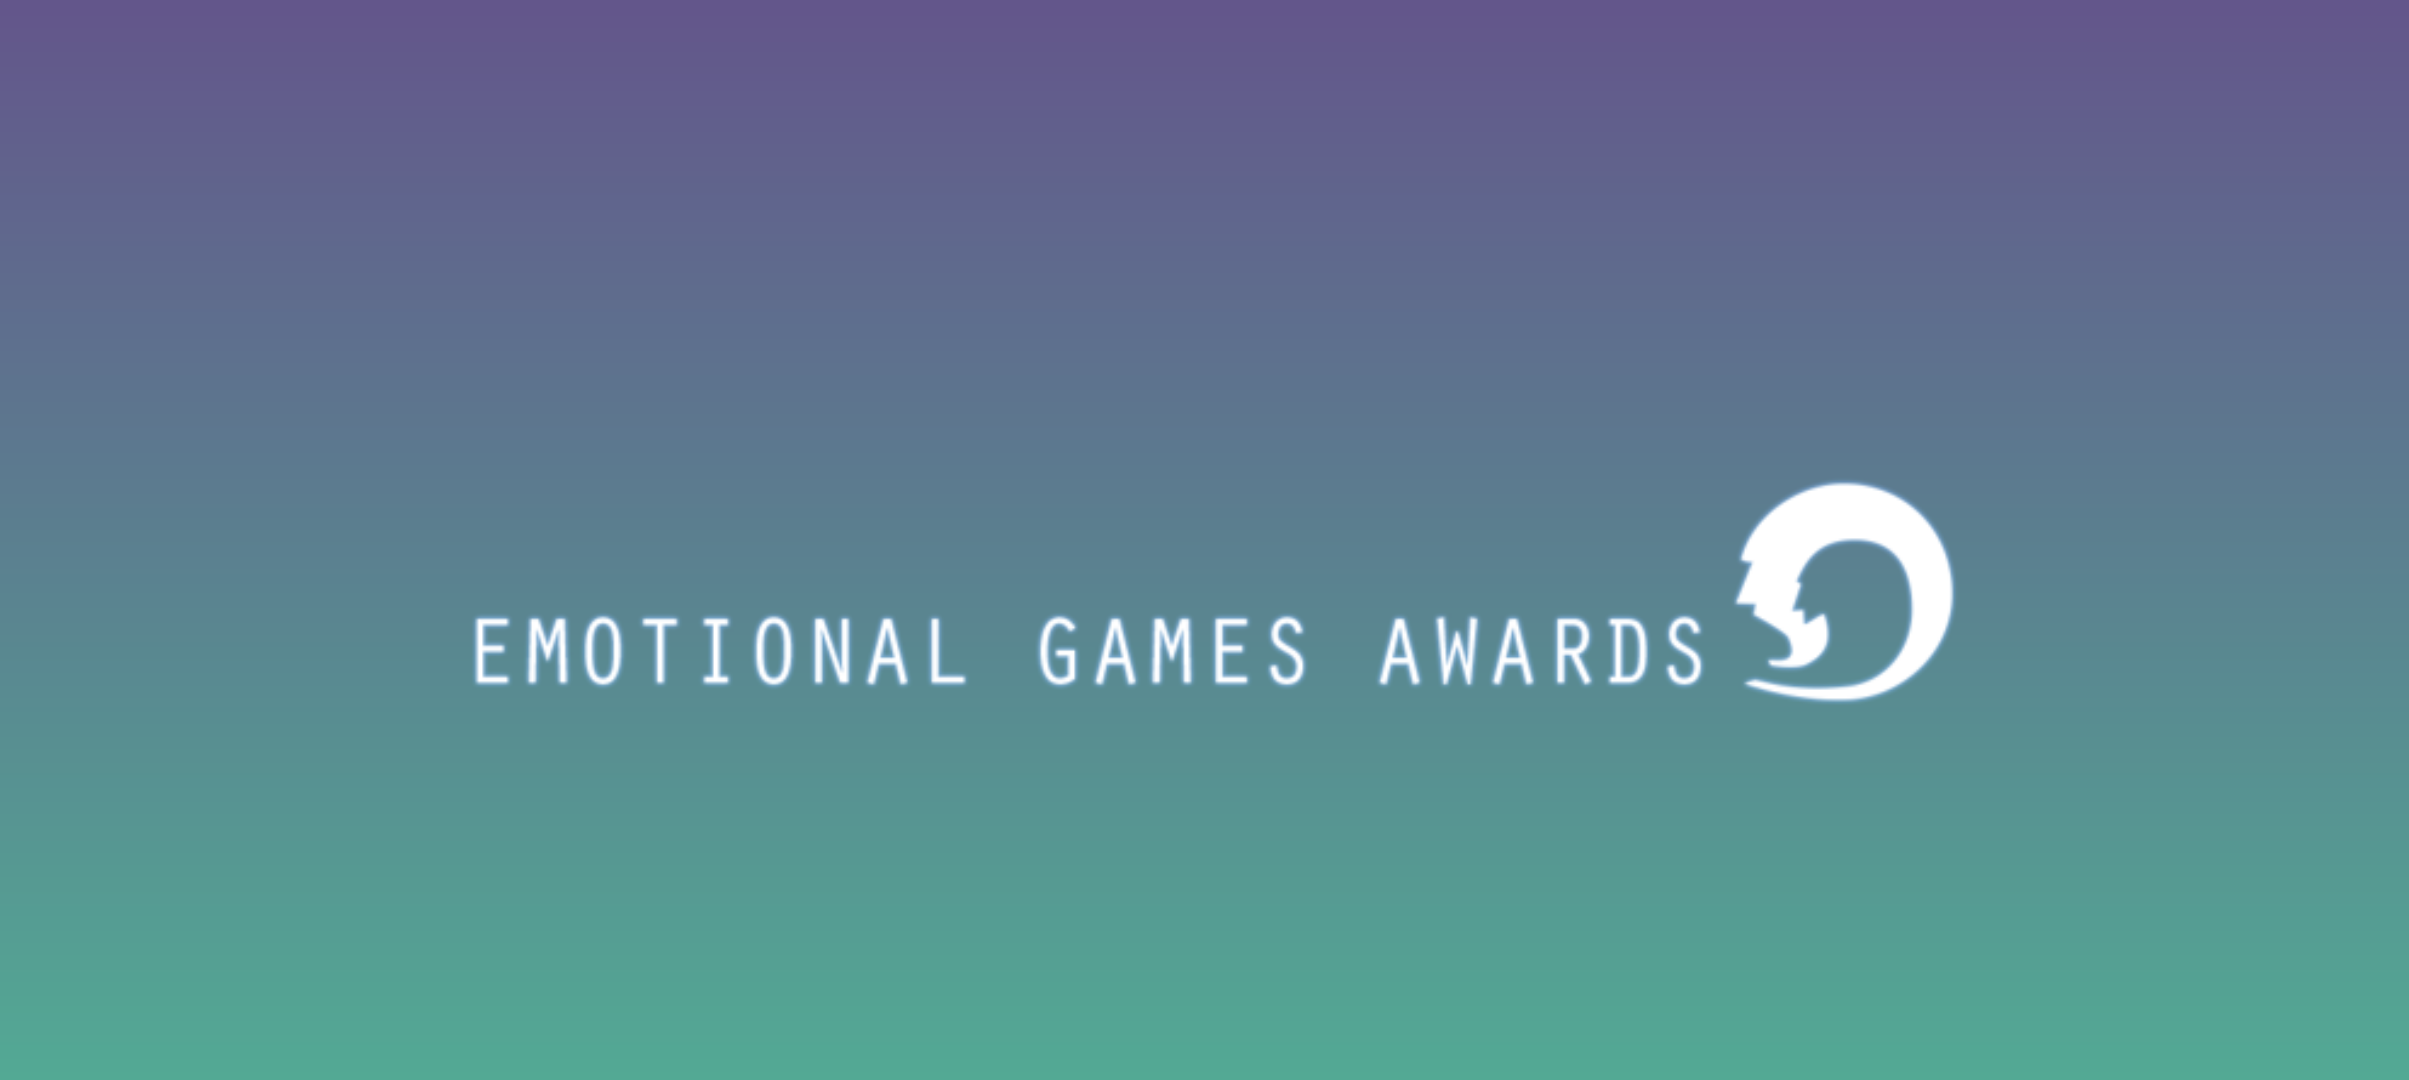 Emotional Games Awards Logo